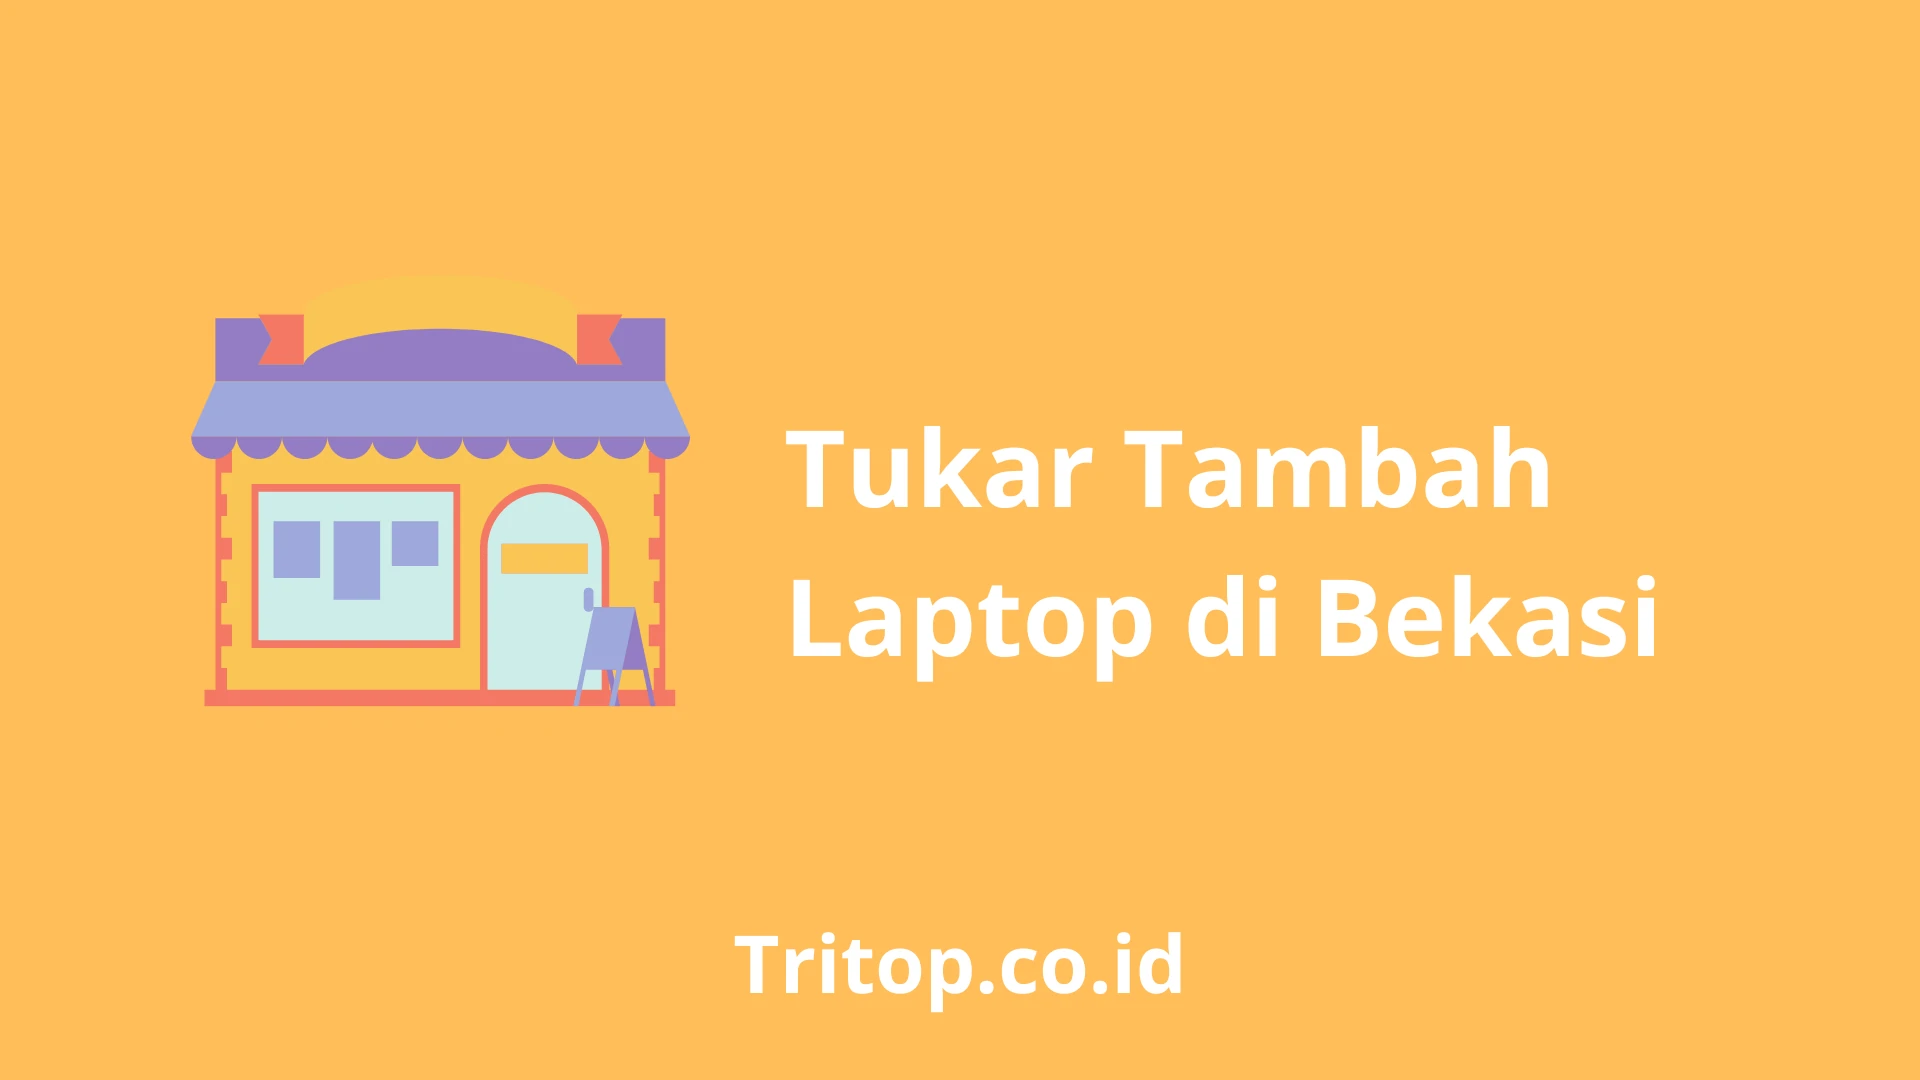 Tukar Tambah Laptop Bekasi tritop.co.id